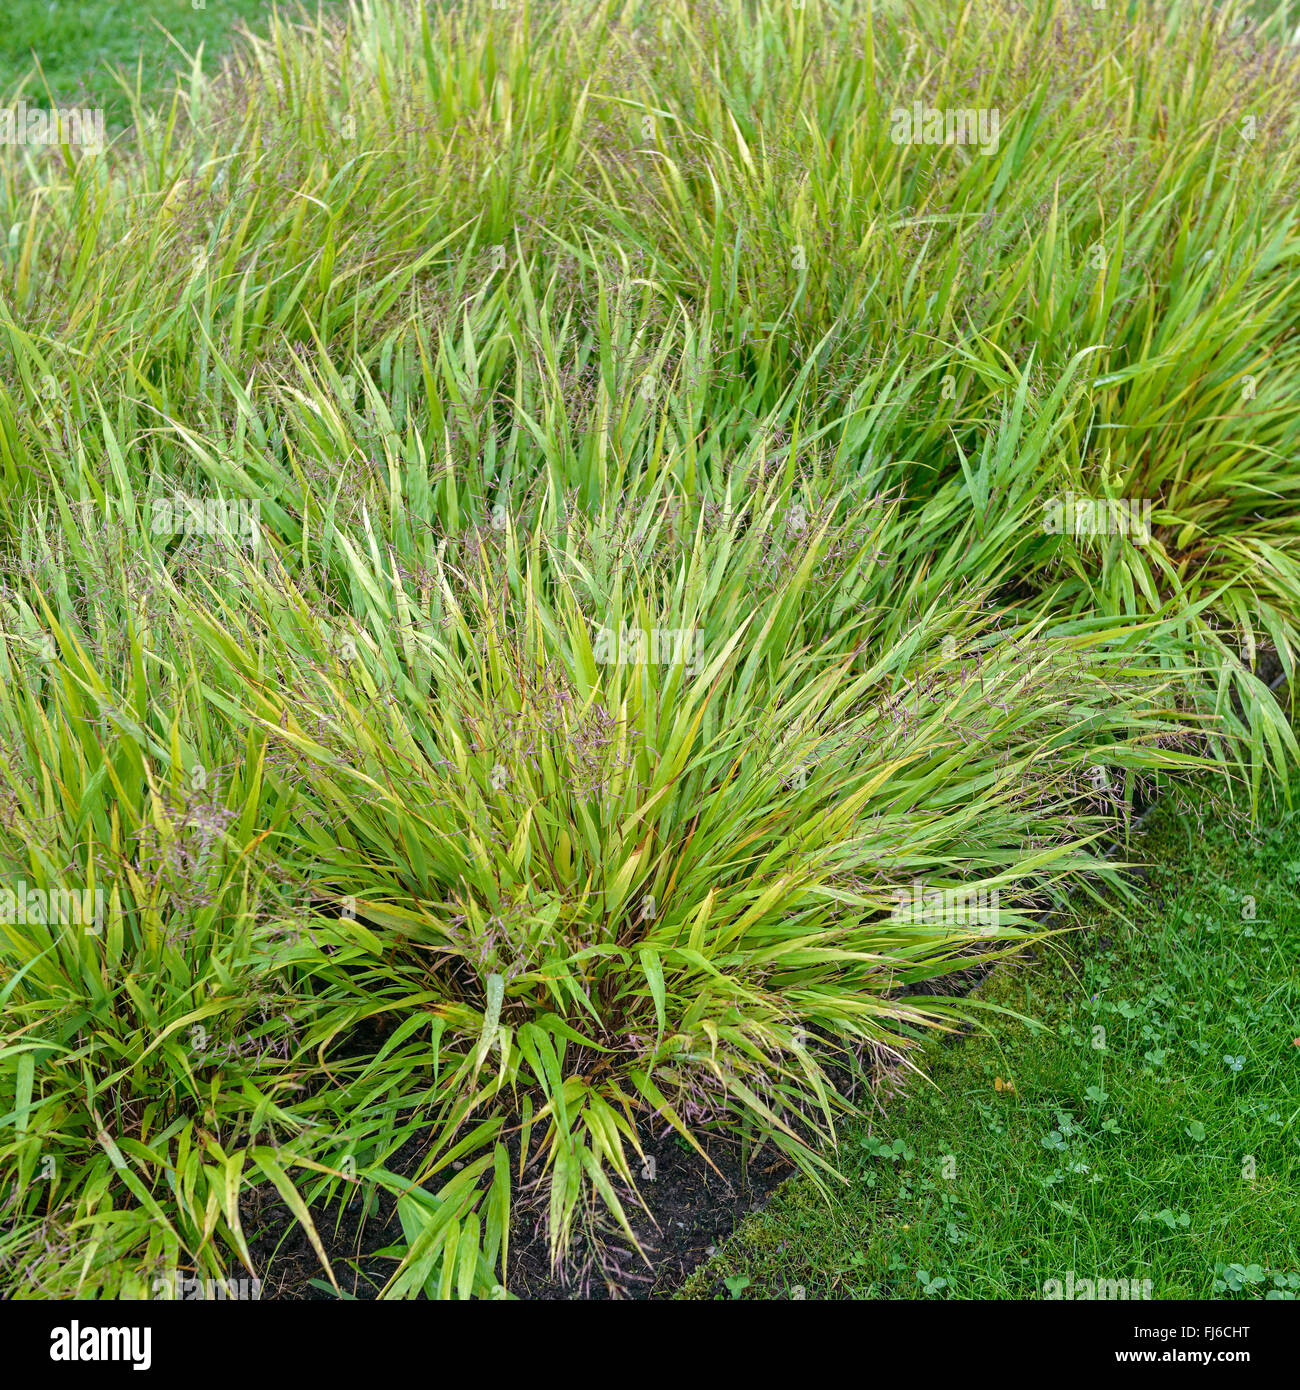 Japanese forest grass, Hakone grass (Hakonechloa macra), blooming Stock Photo